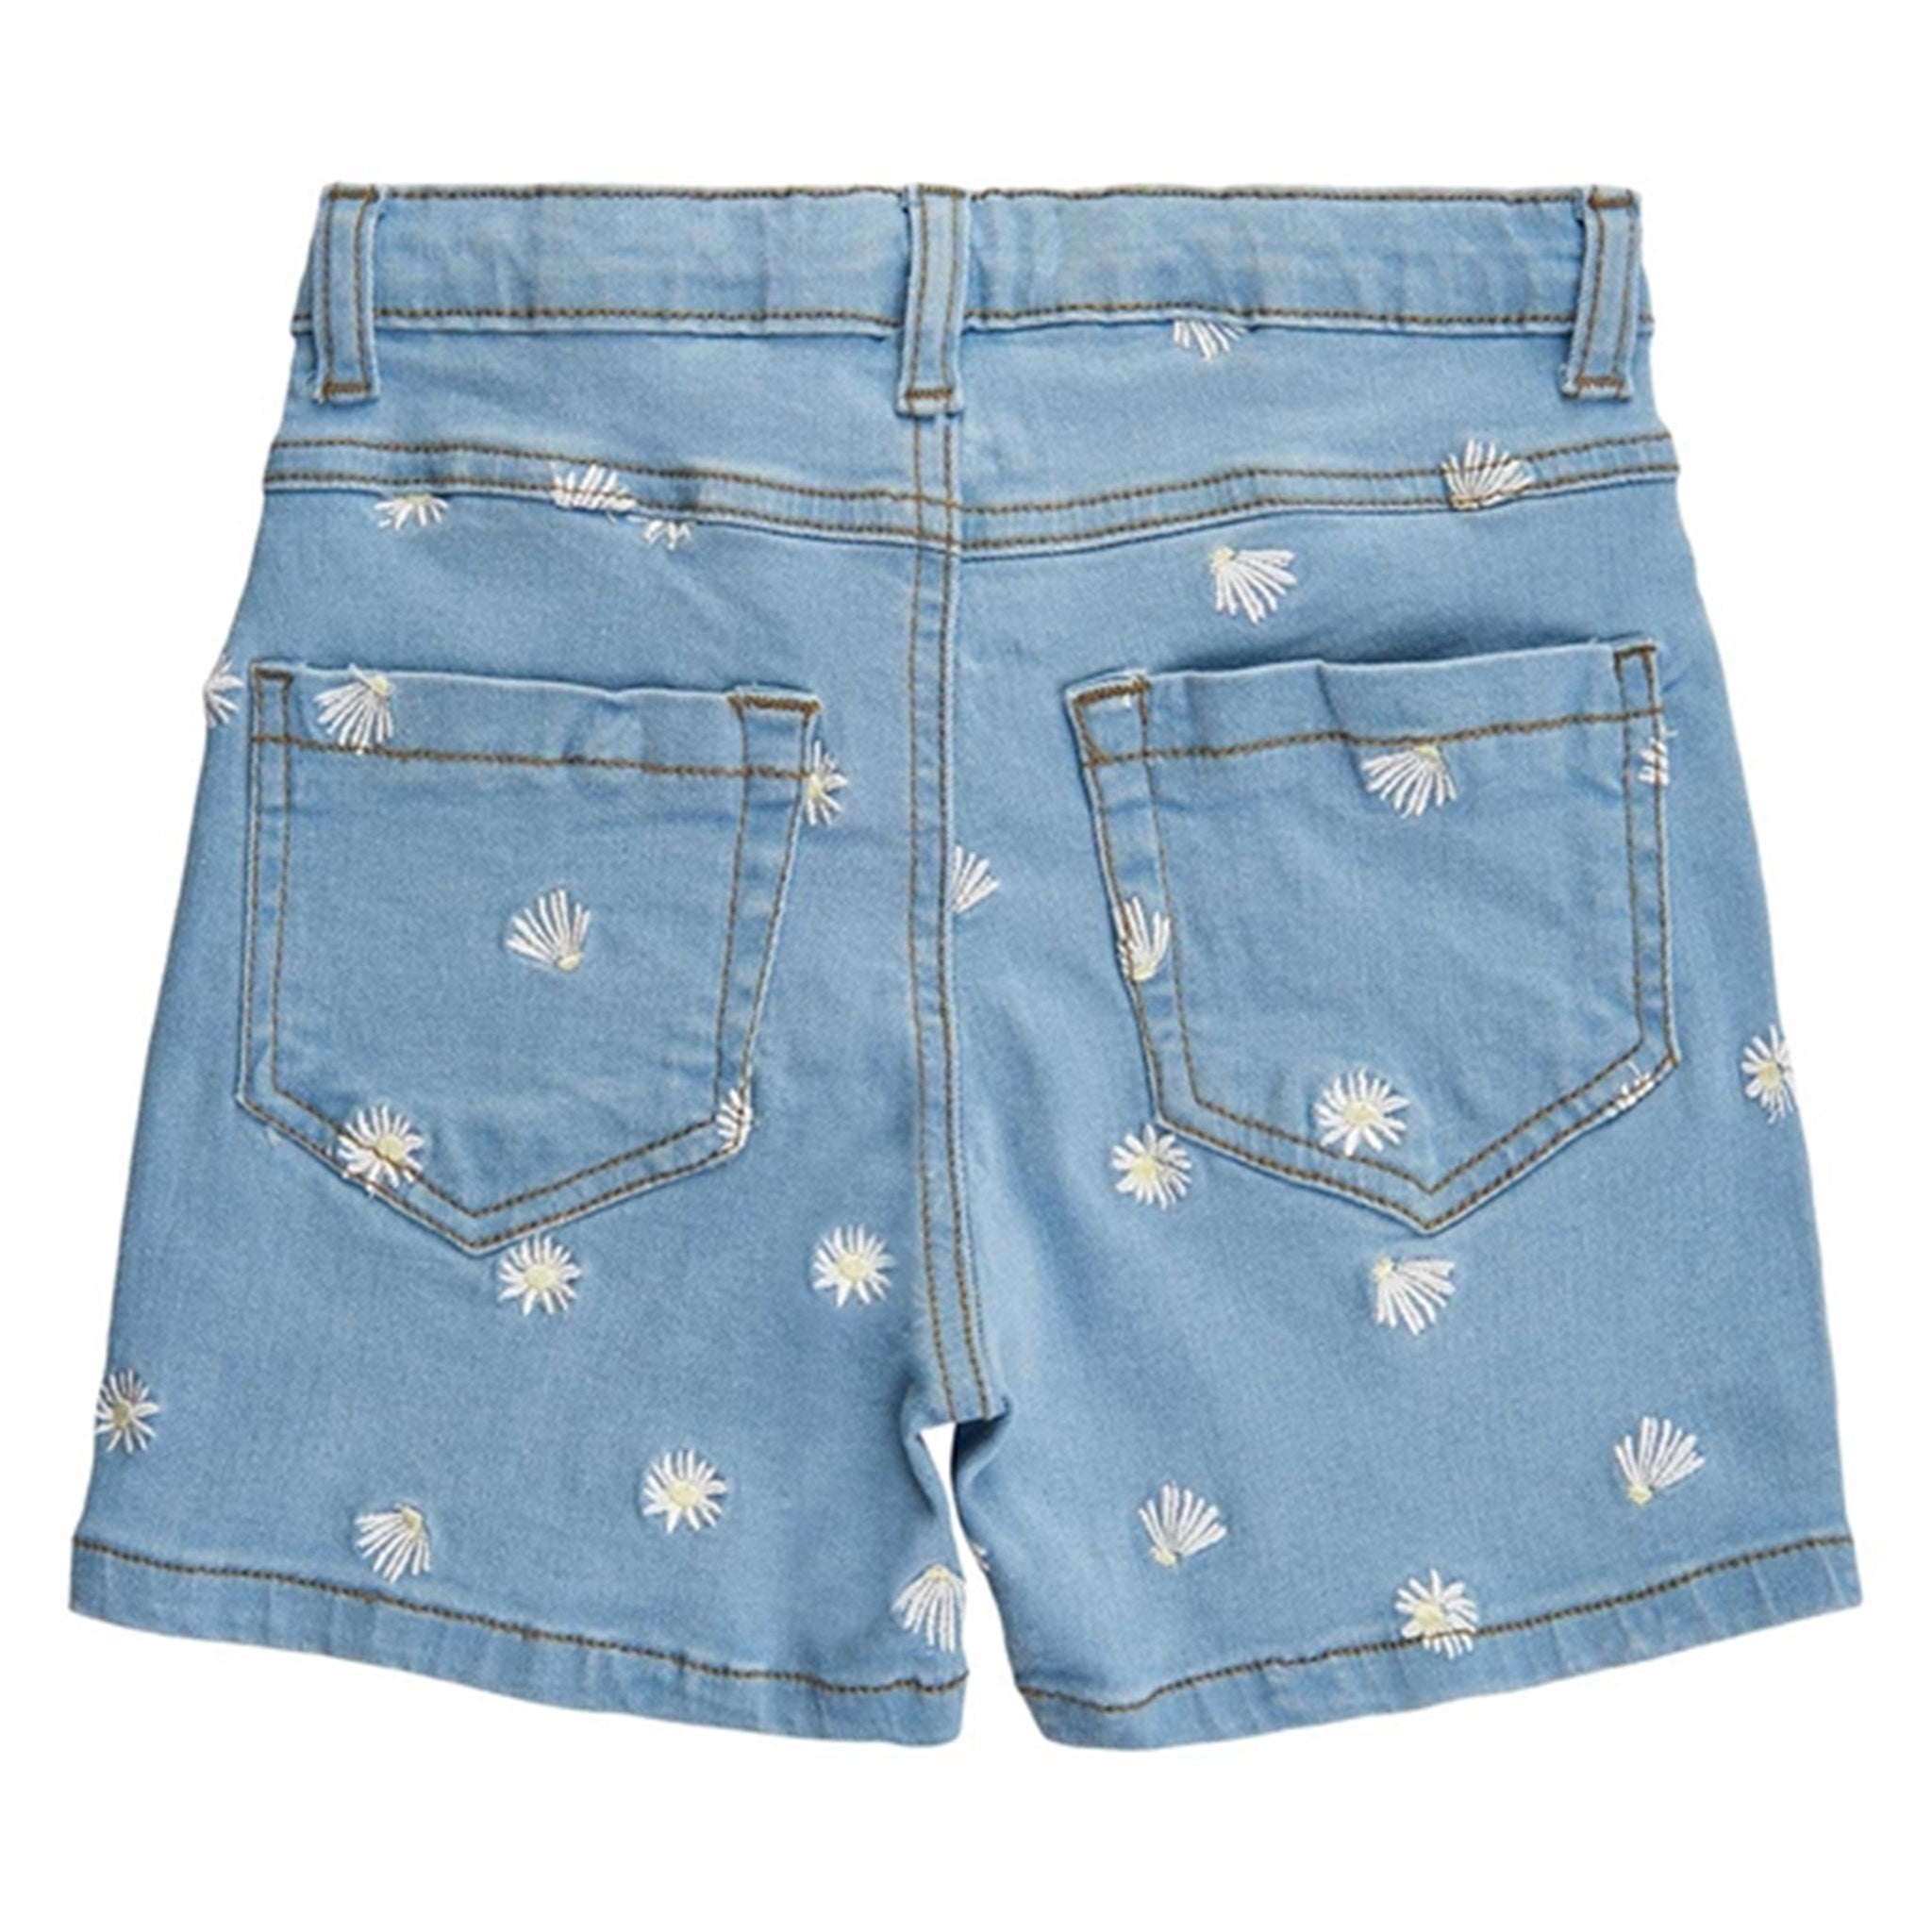 The New Light Blue Denim Broidery Denim Shorts 2